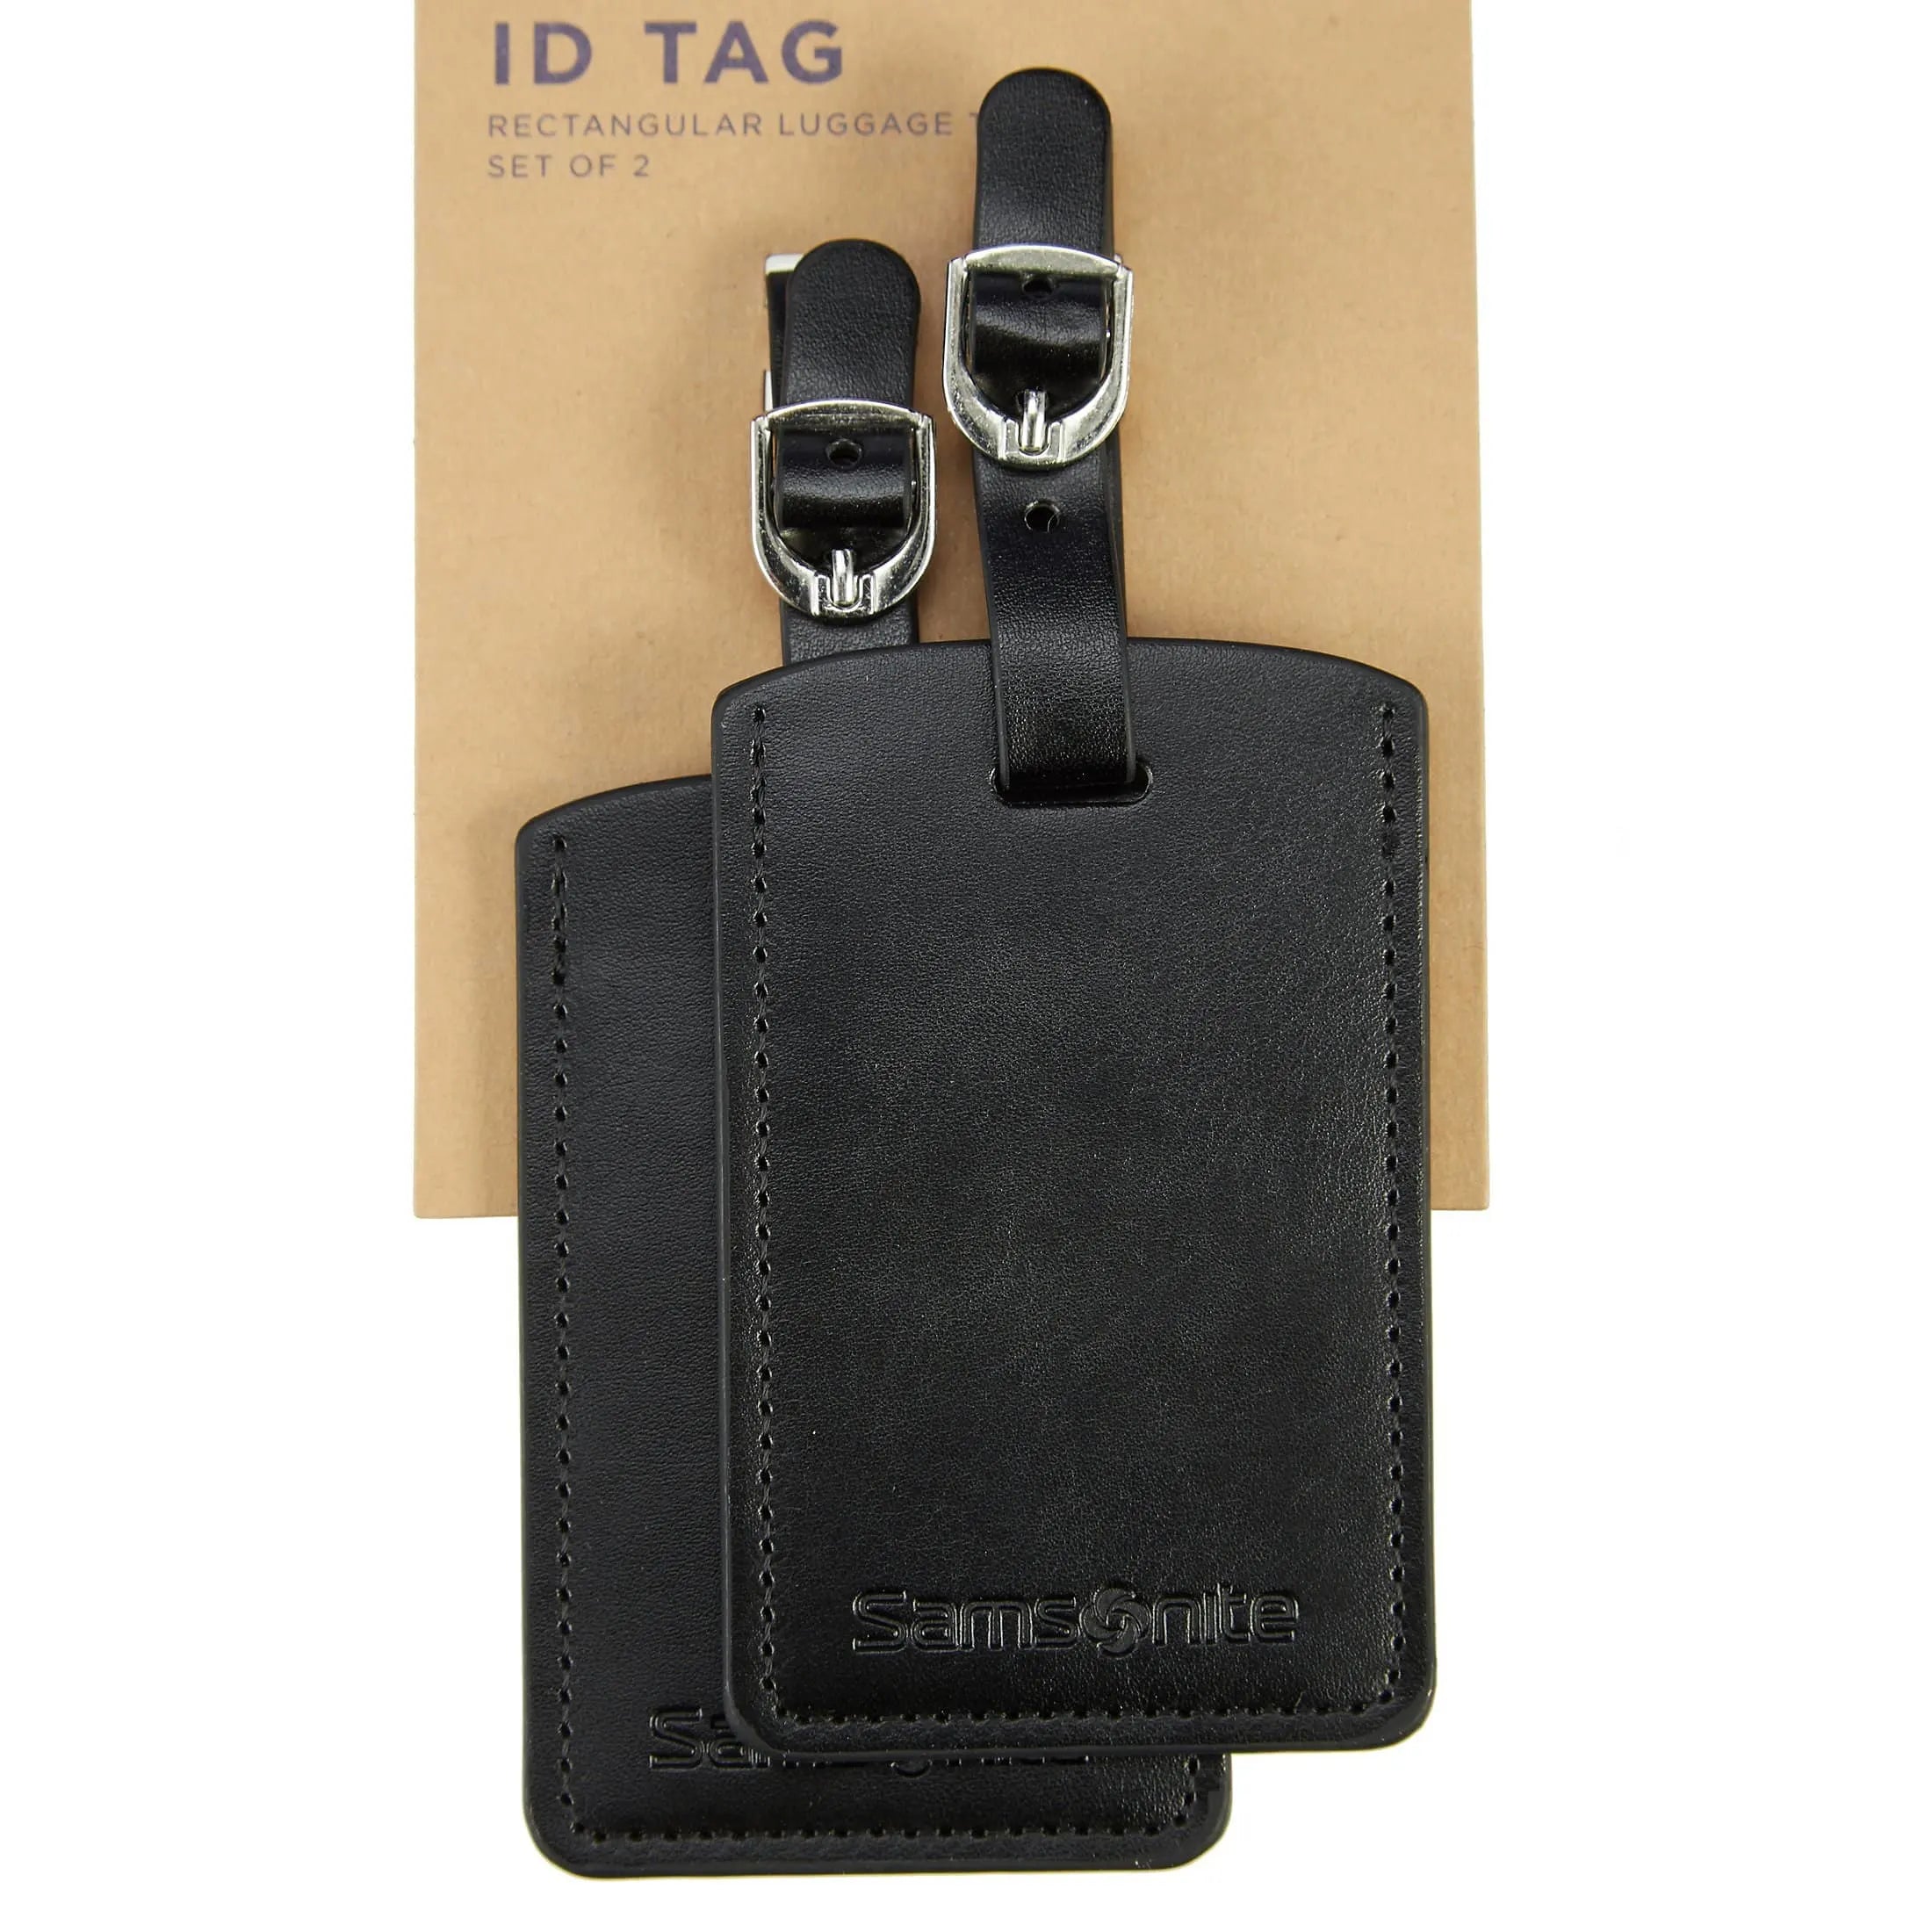 Samsonite Travel Accessories luggage tag set - black